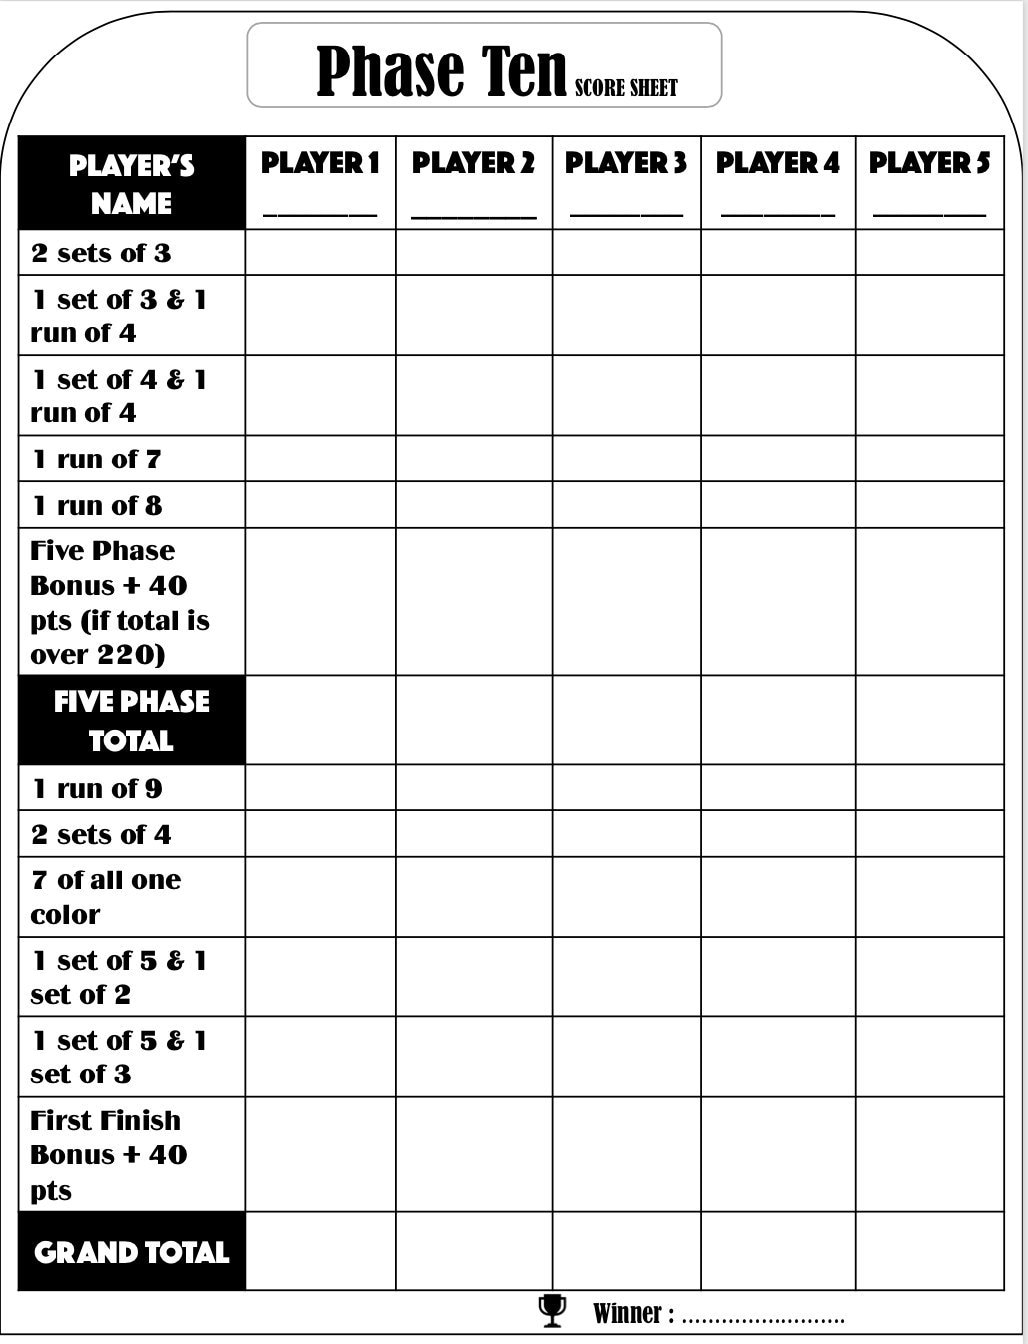 Phase Ten Score Card Phase Ten Scoresheet Phase Ten Score Pads Printable File PDF Download 8 5x11 Etsy Israel